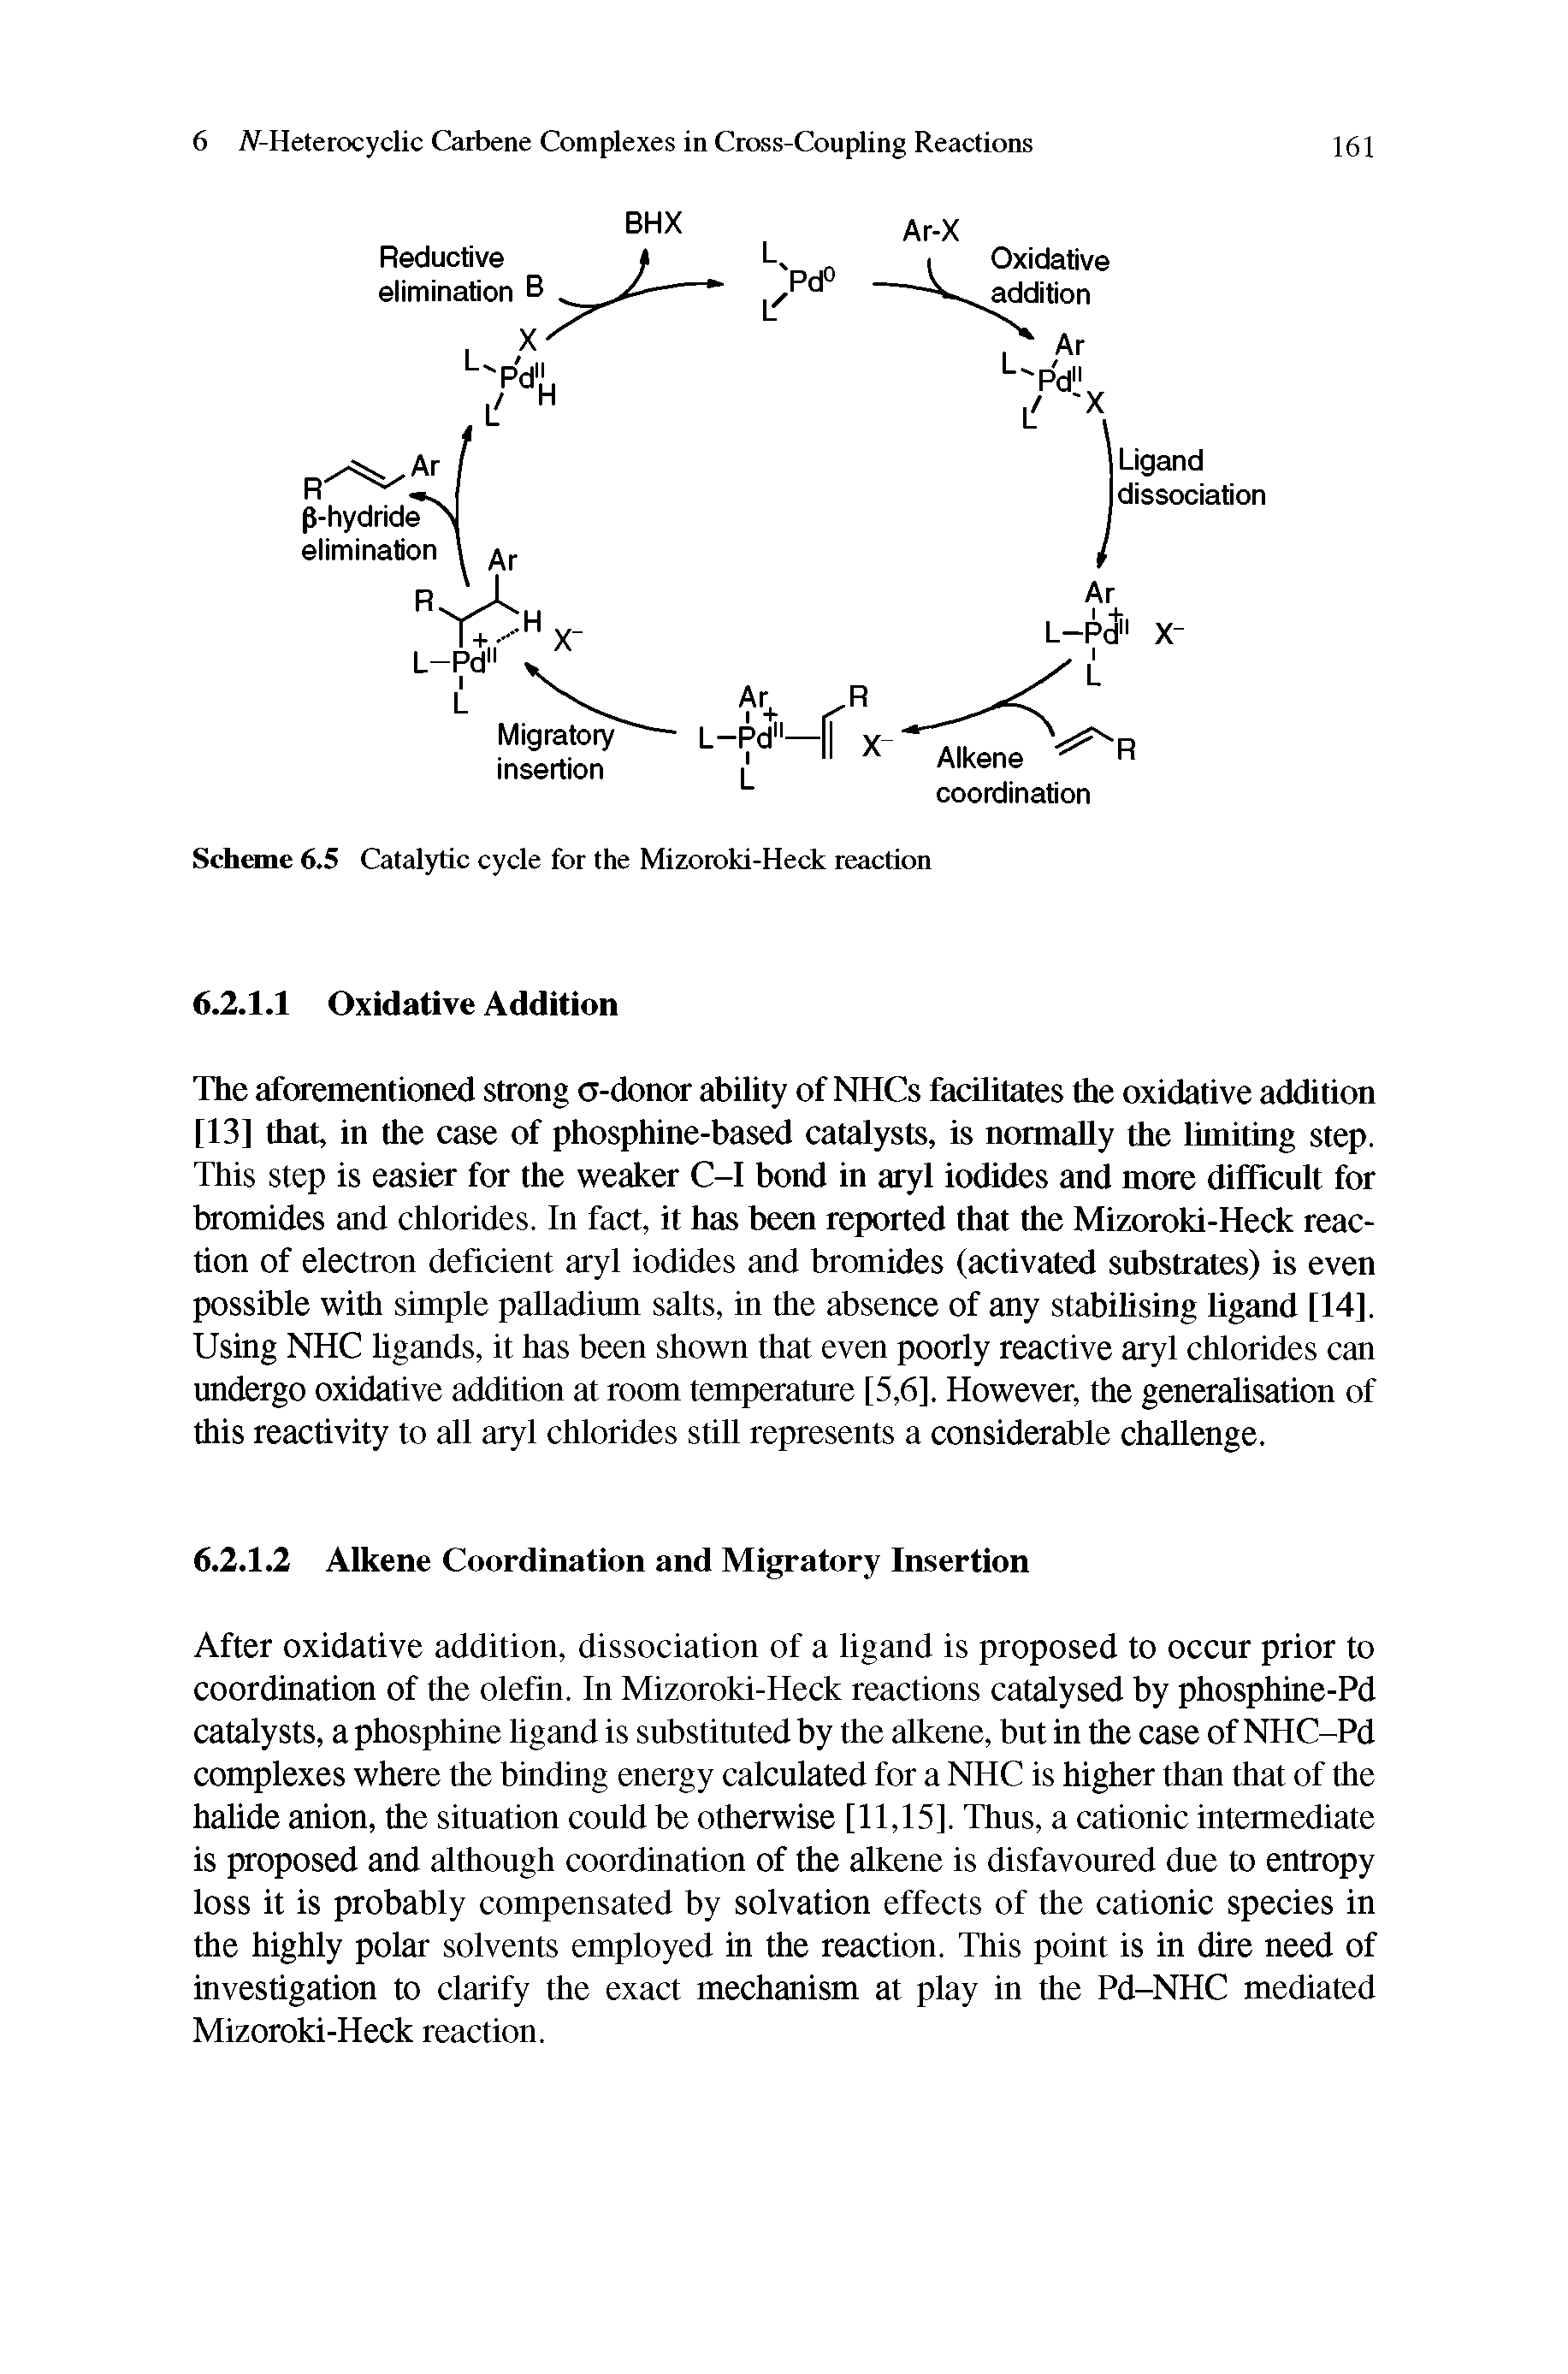 Scheme 6.5 Catalytic cycle for the Mizoroki-Heck reaction...